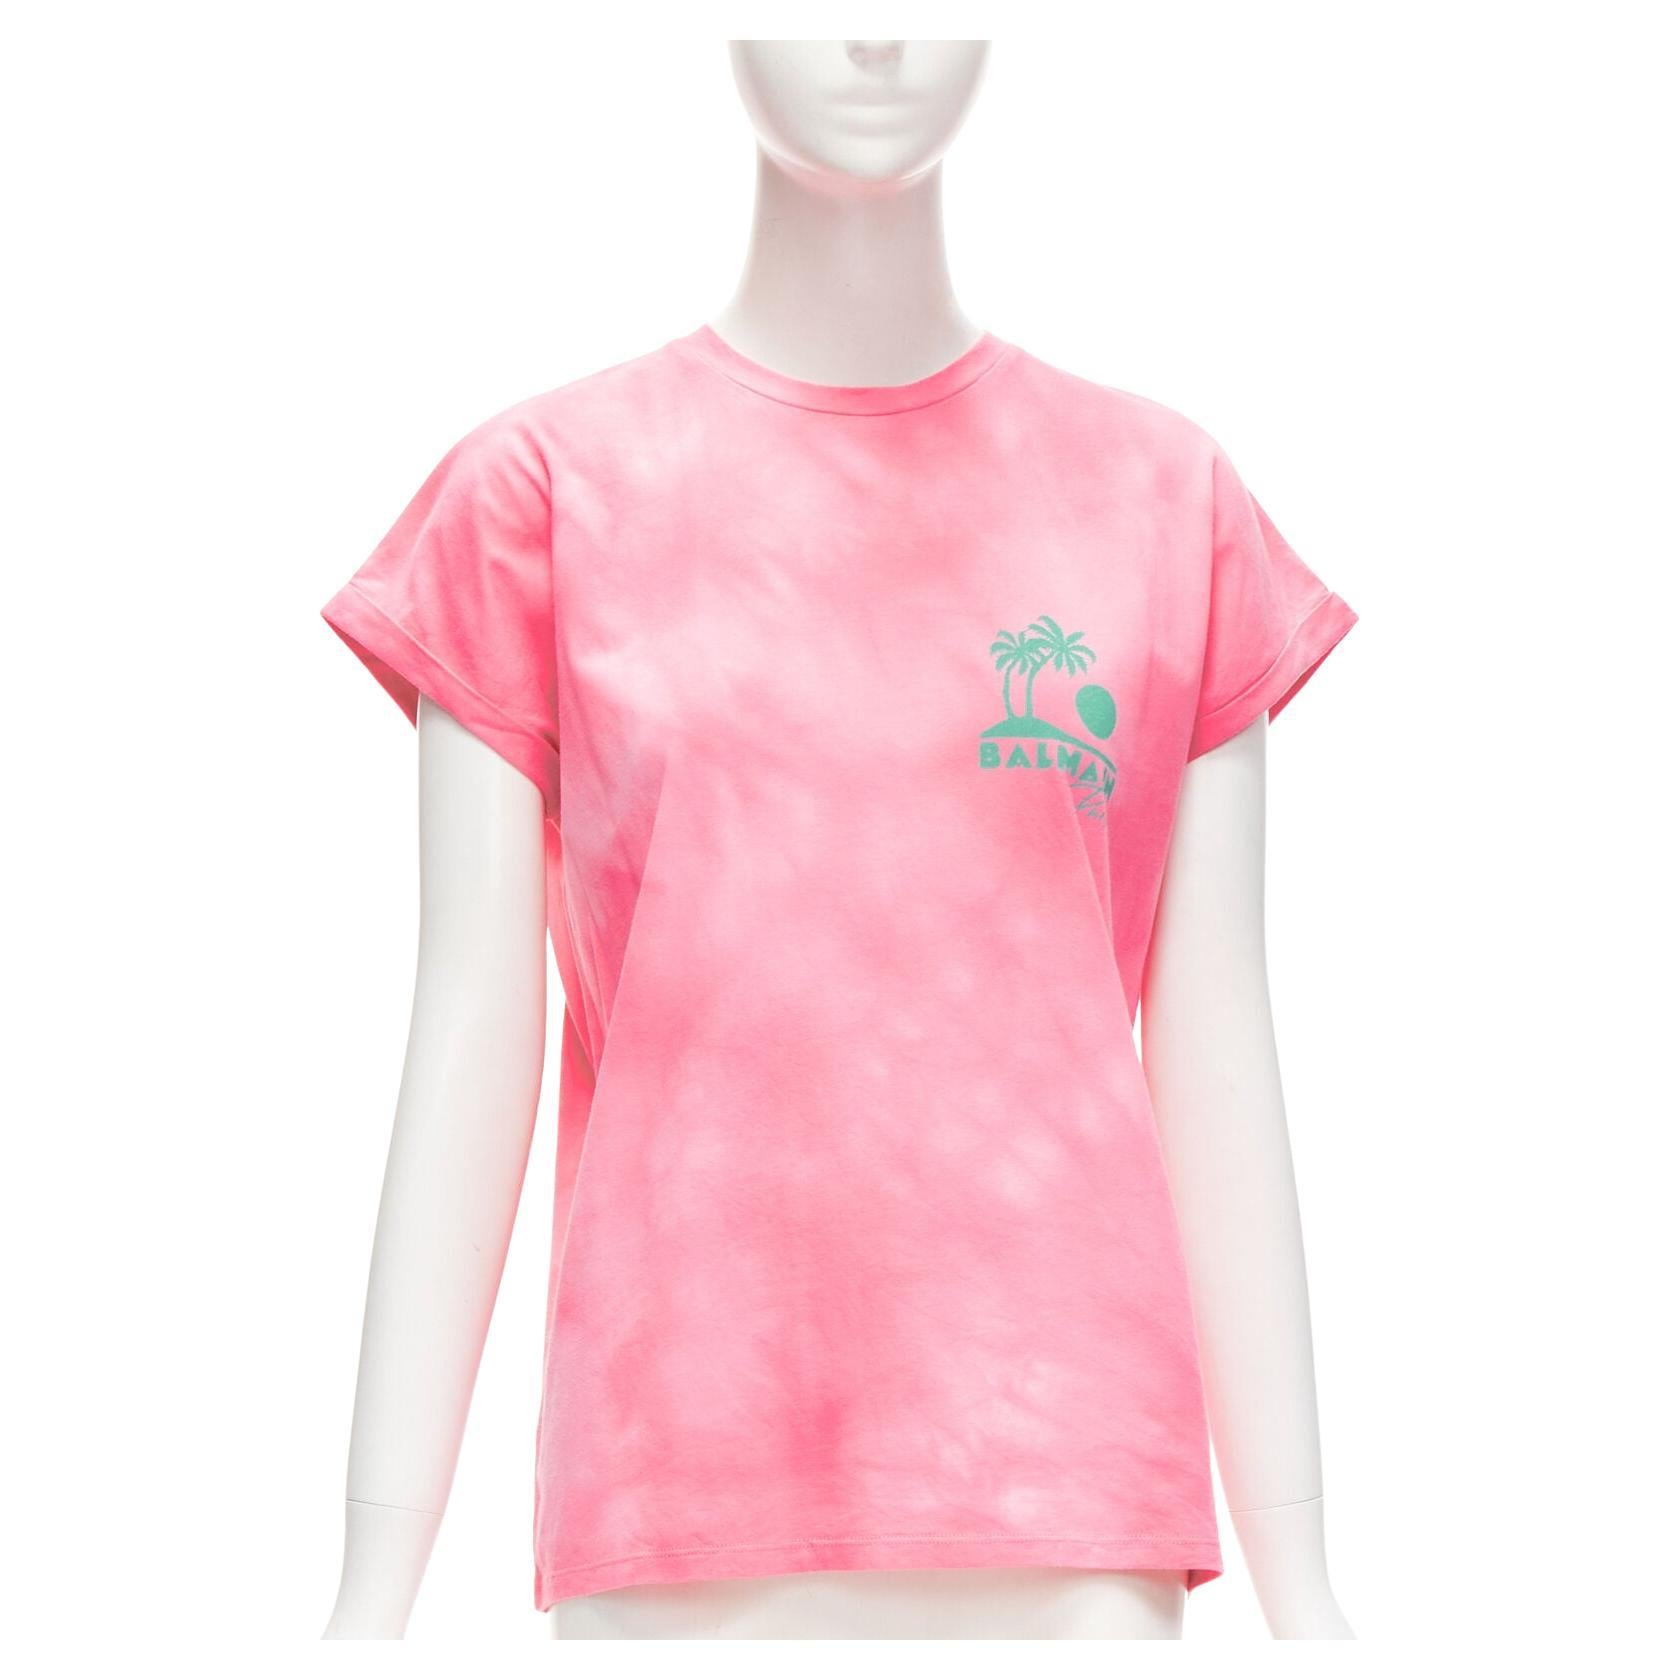 BALMAIN green palm tree logo pink tie dye crew neck cap sleeves tshirt top XXS For Sale